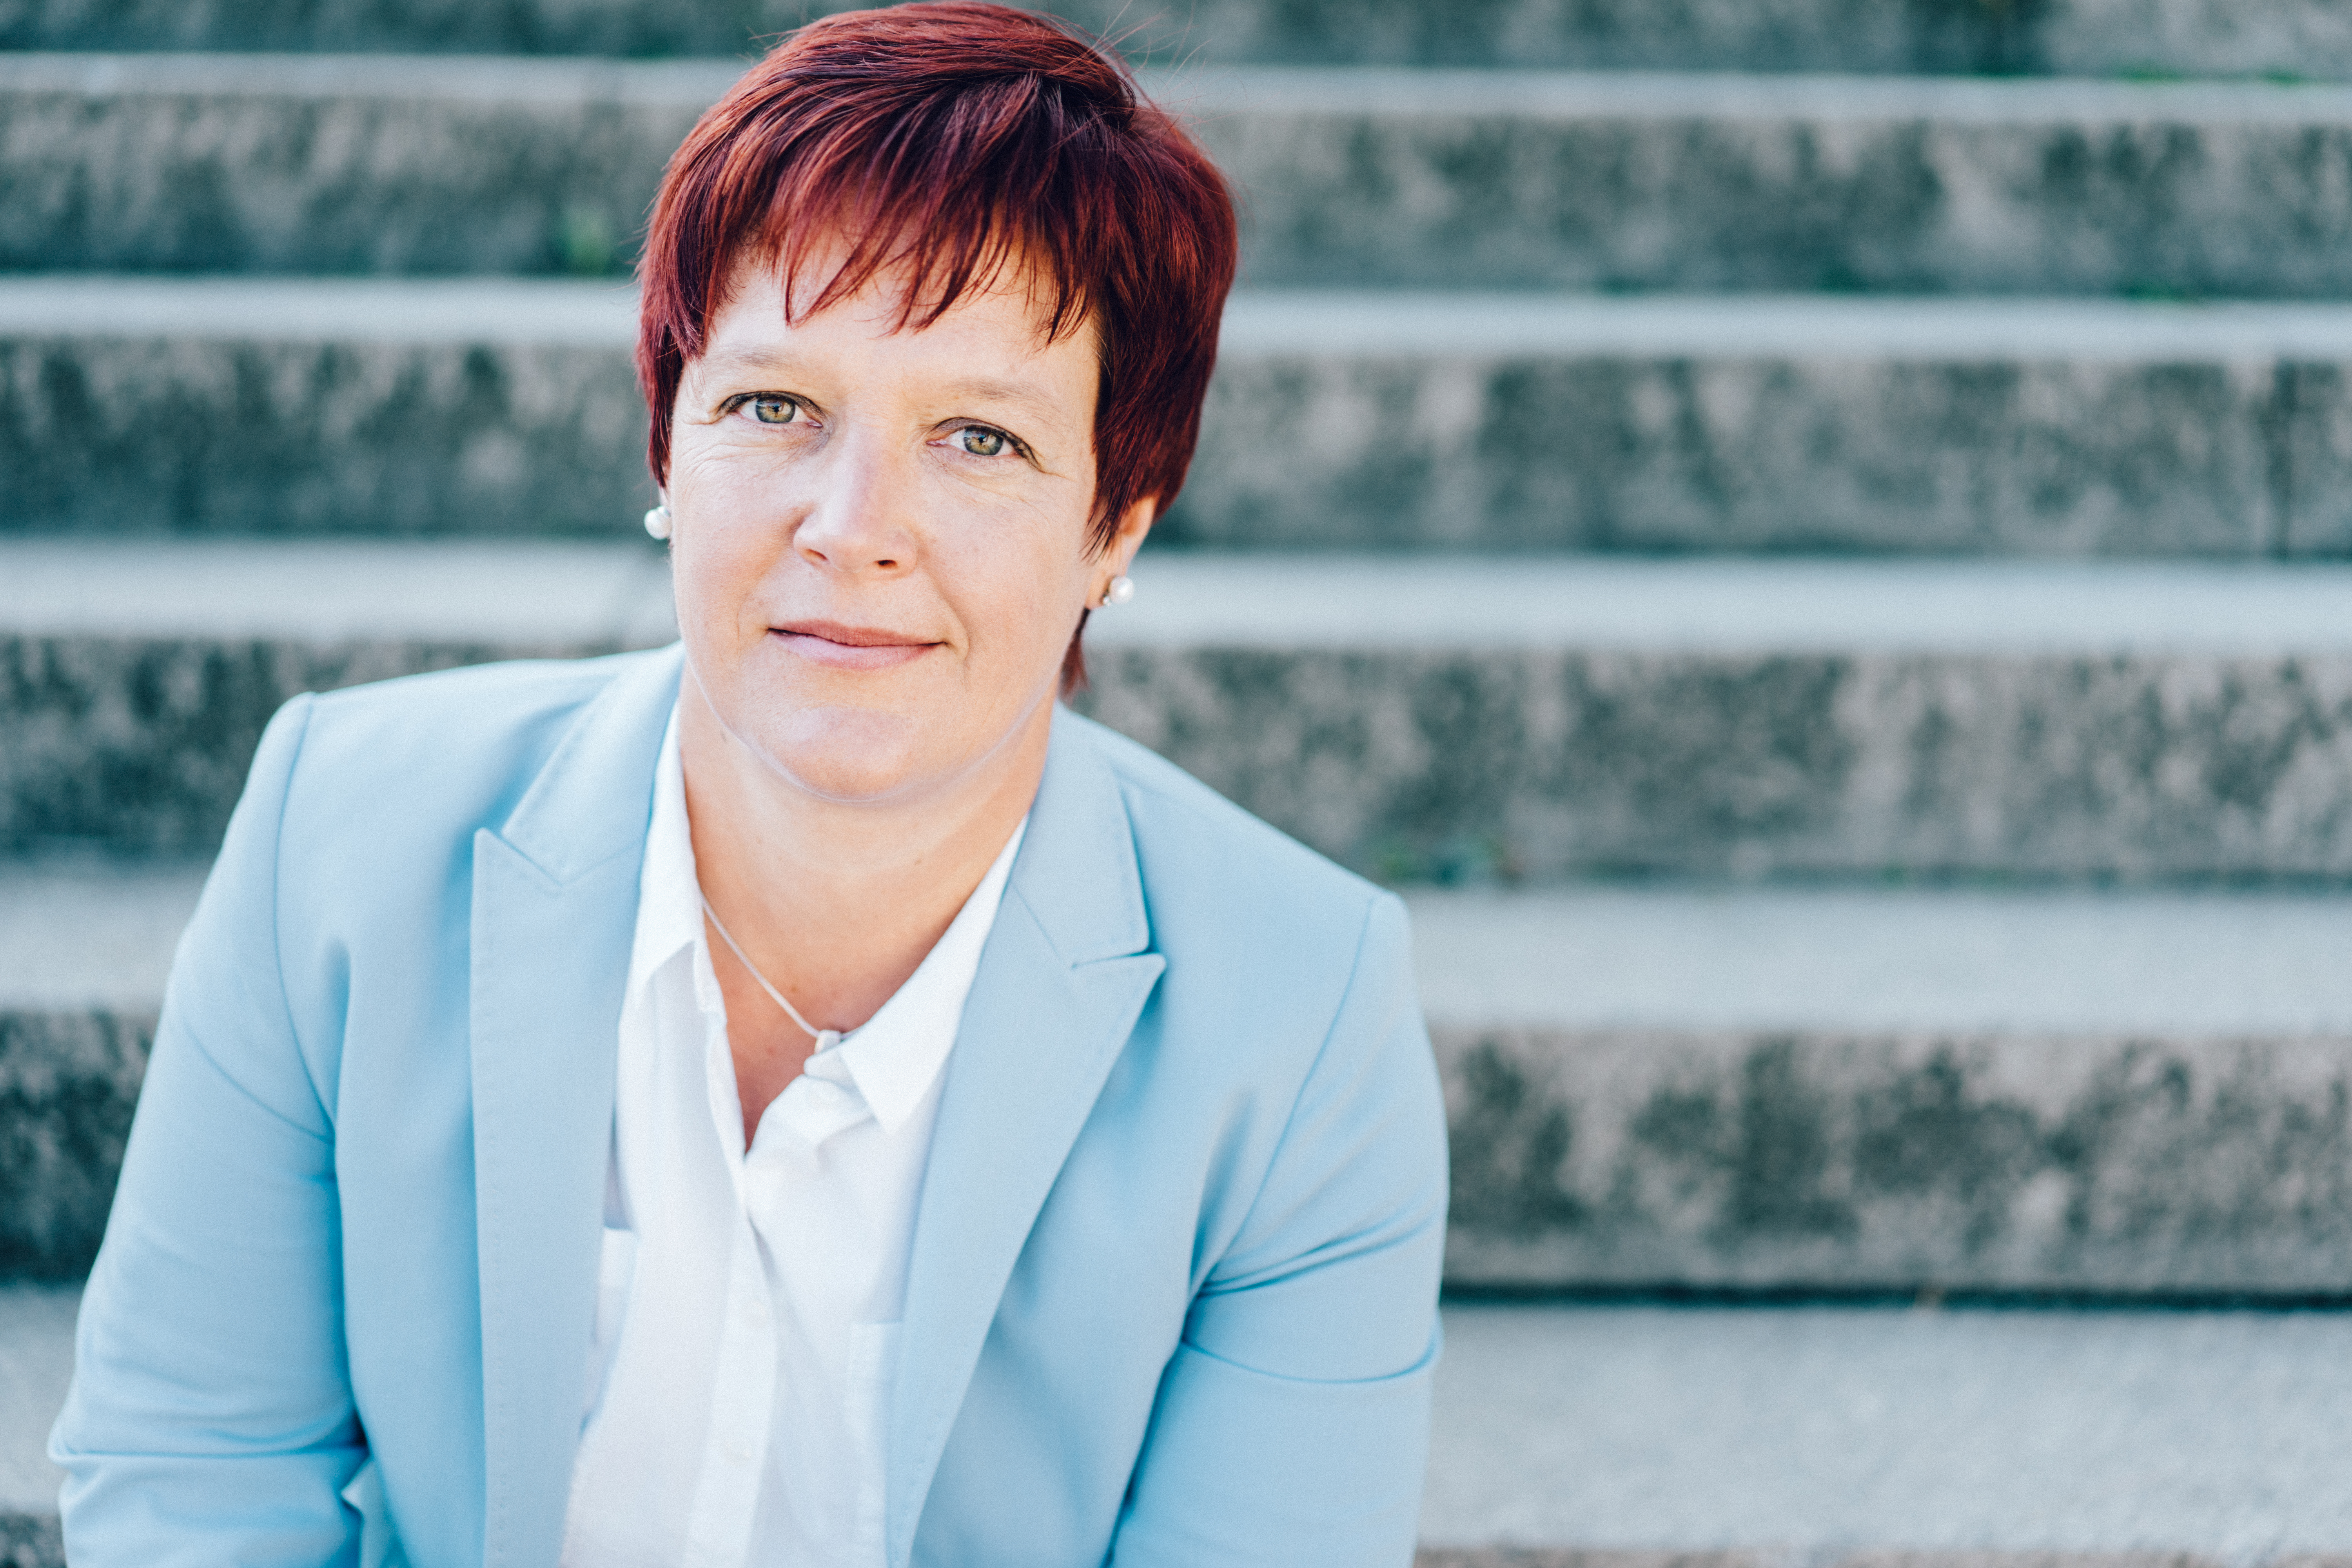 Den Rechtsruck stoppen – Susanne Ferschl diskutiert mit Innenpolitkerin Renner